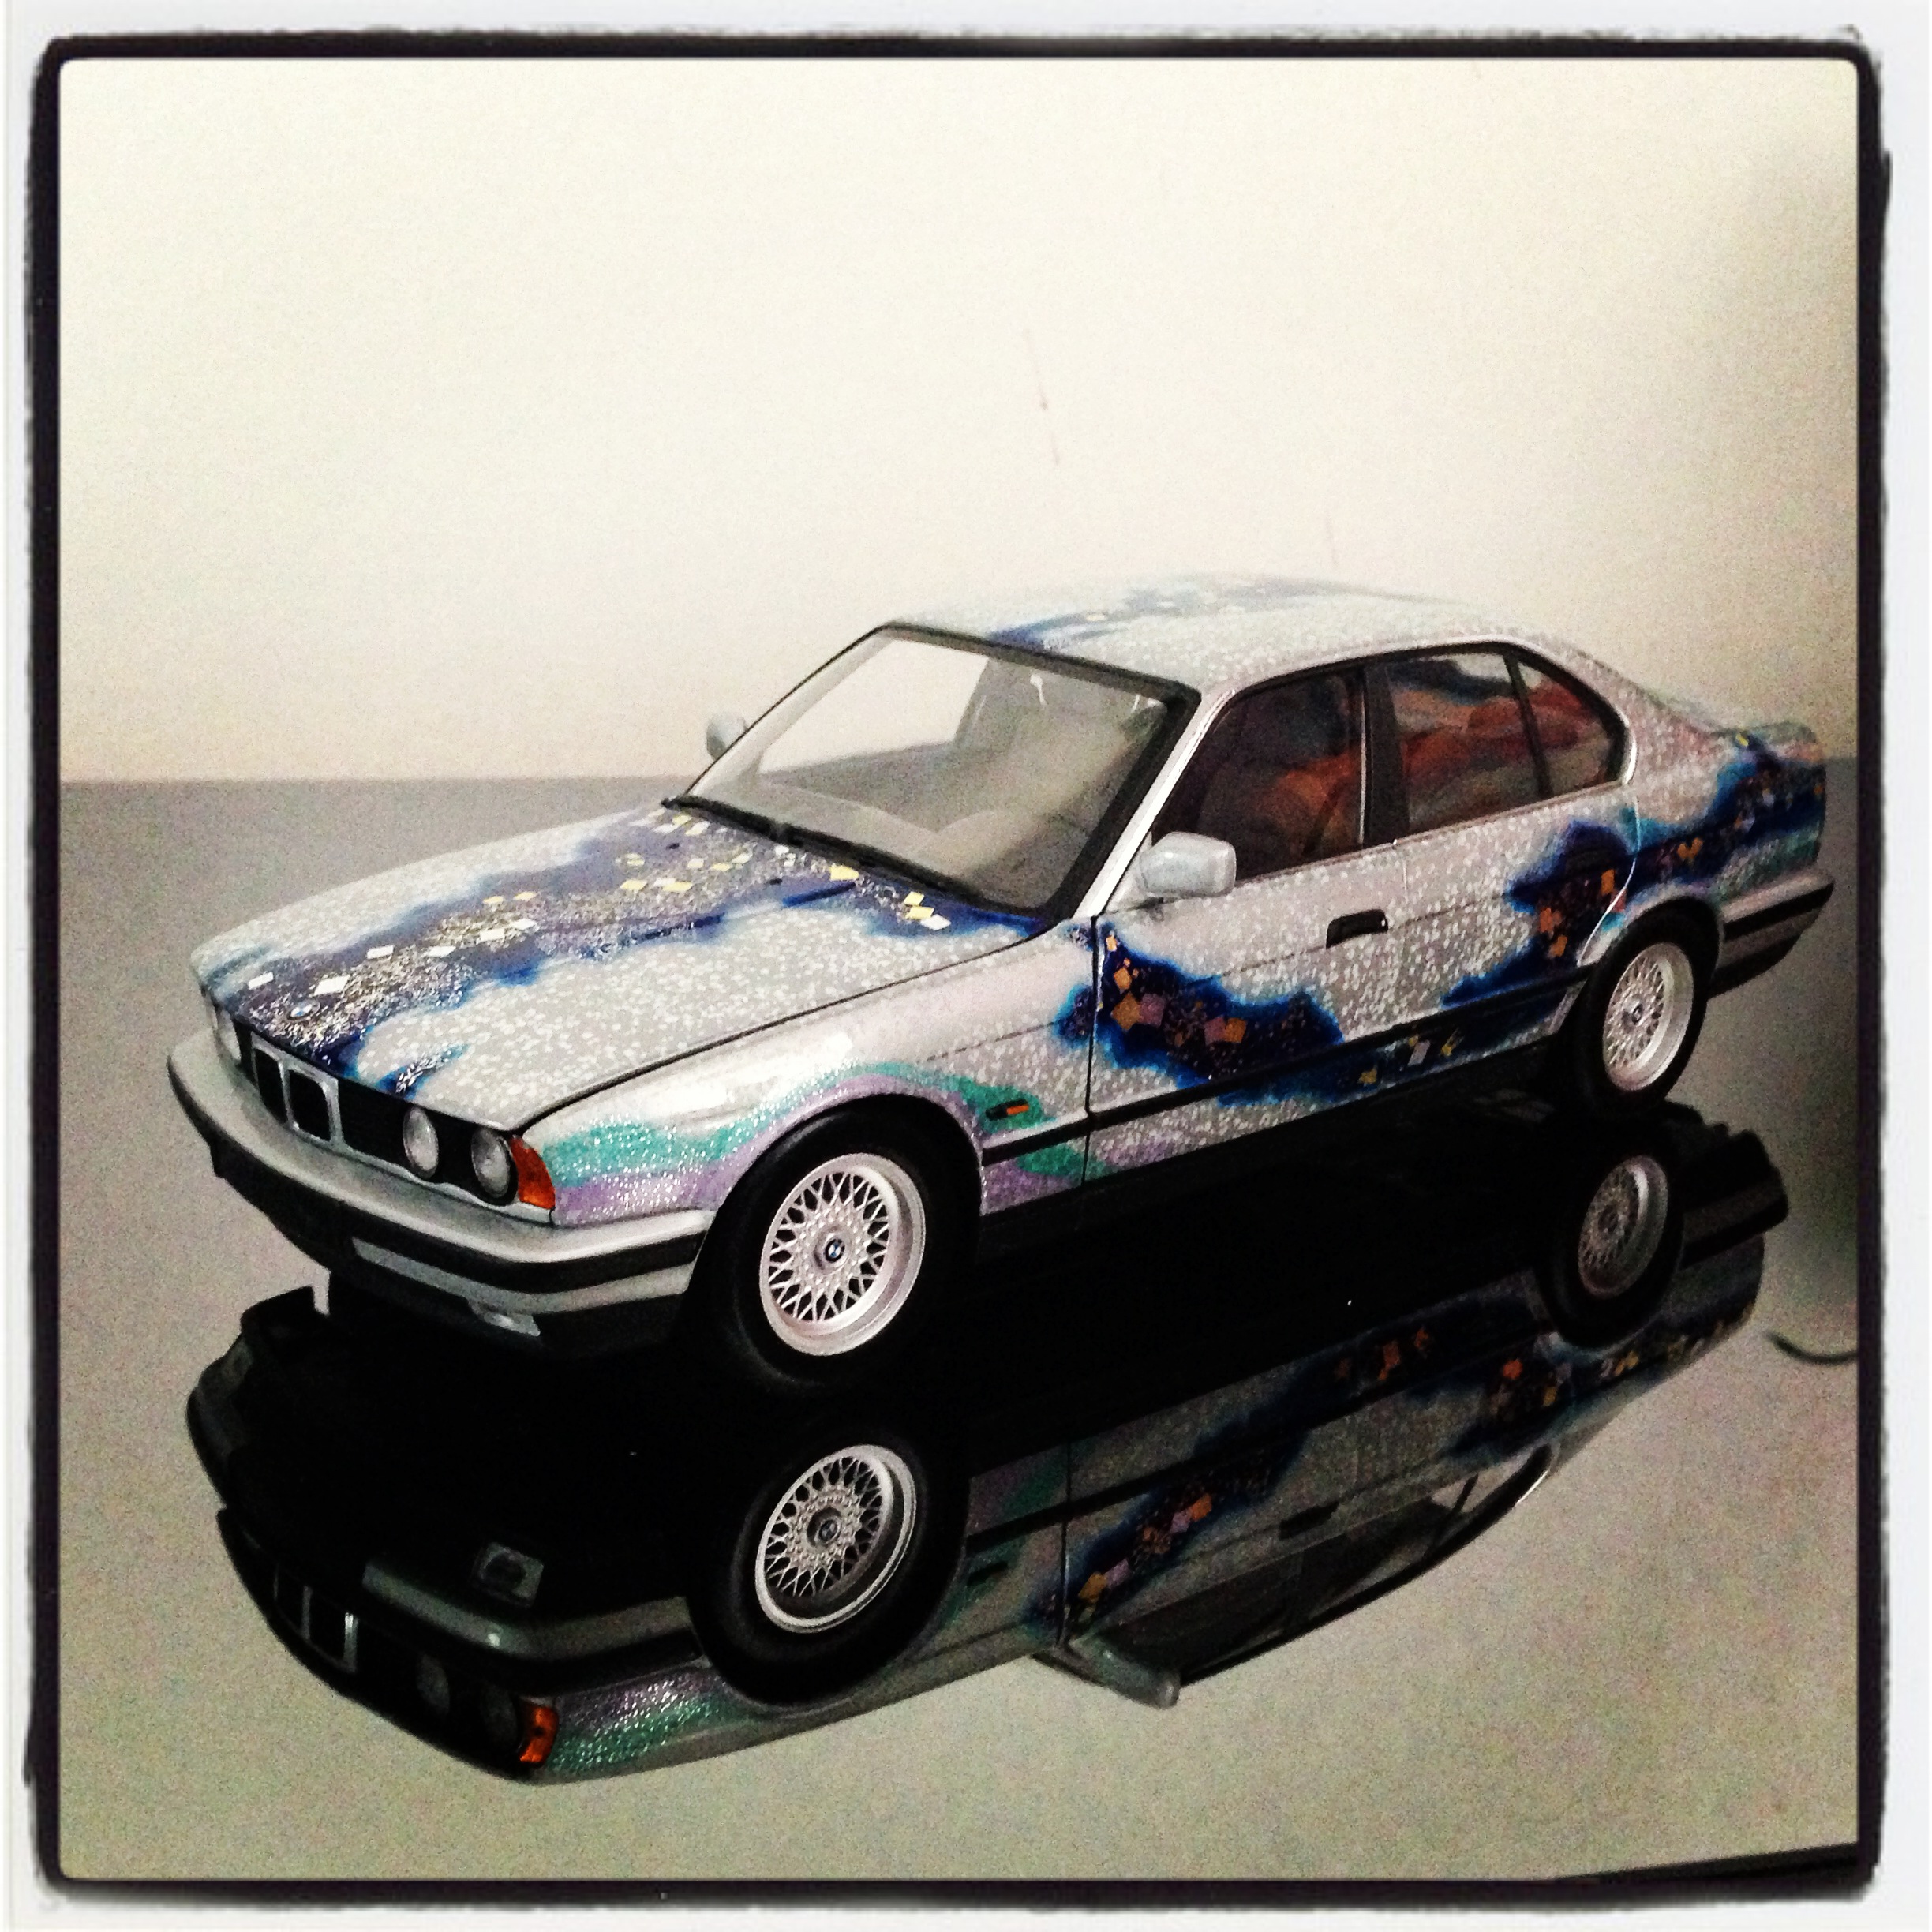 BMW 535i, Matazo Kayama, 1990 (minichamps)